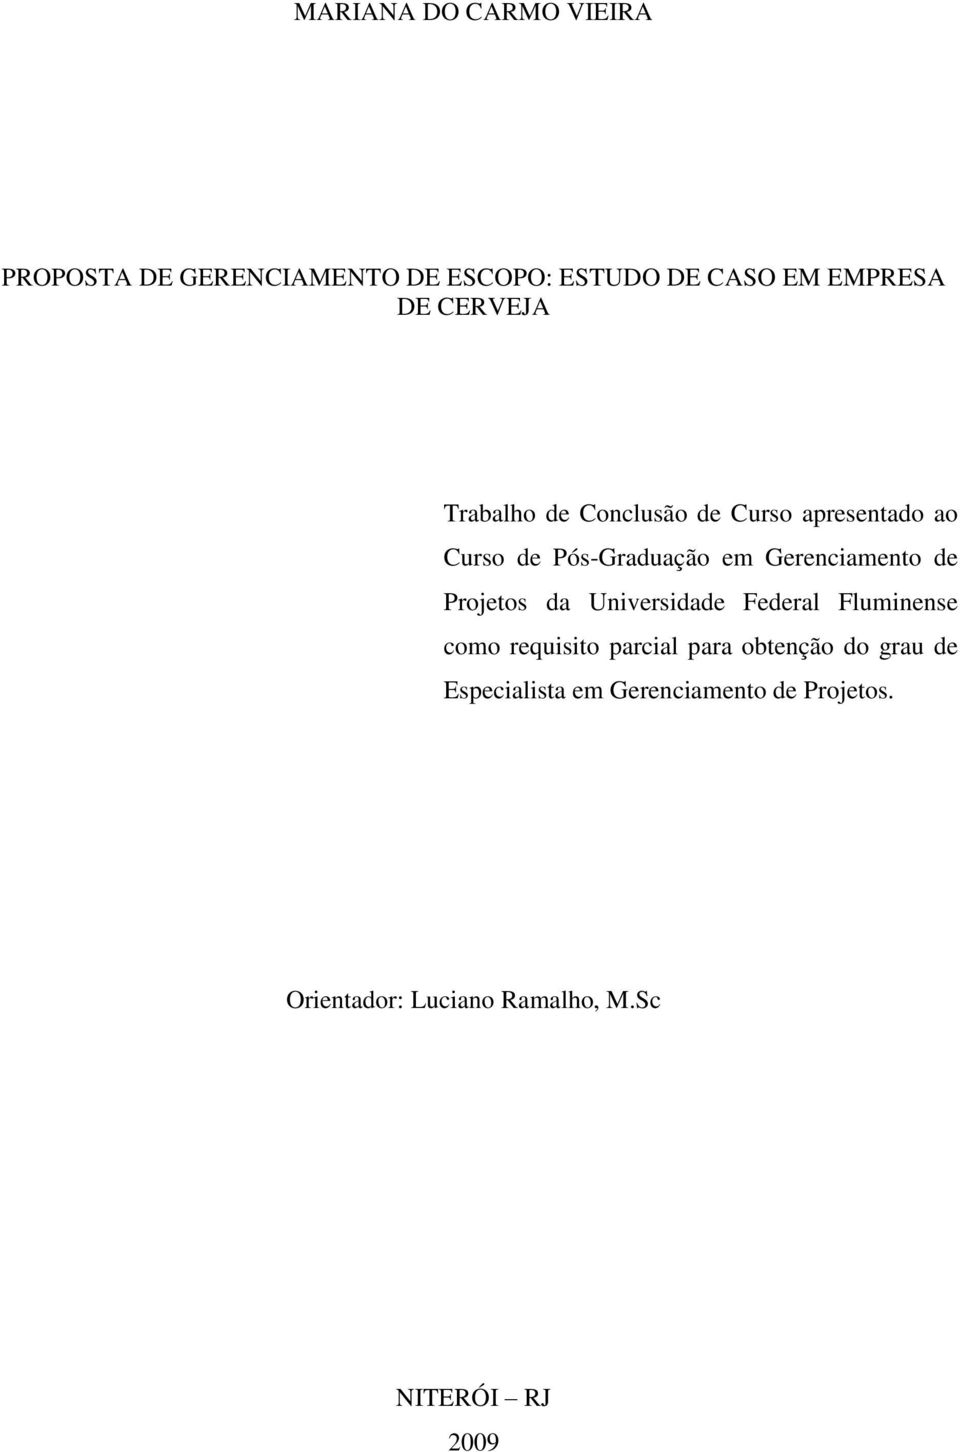 Gerenciamento de Projetos da Universidade Federal Fluminense como requisito parcial para